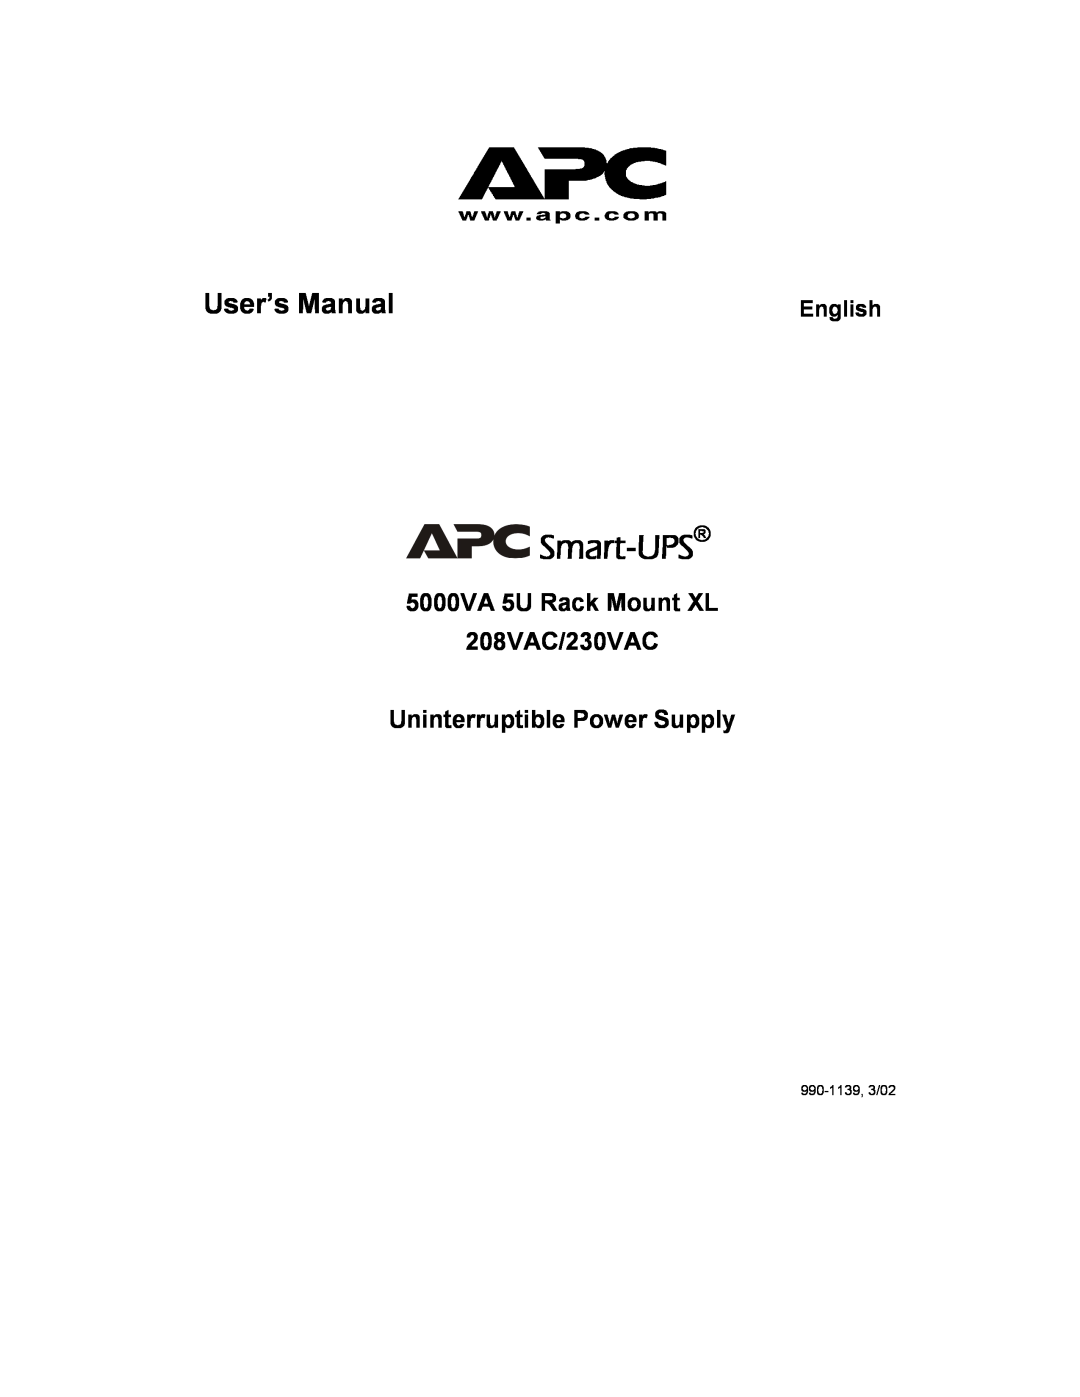 American Power Conversion 208VAC, 5000VA 5U user manual Smart-UPS, User’s Manual, English, 990-1139, 3/02 